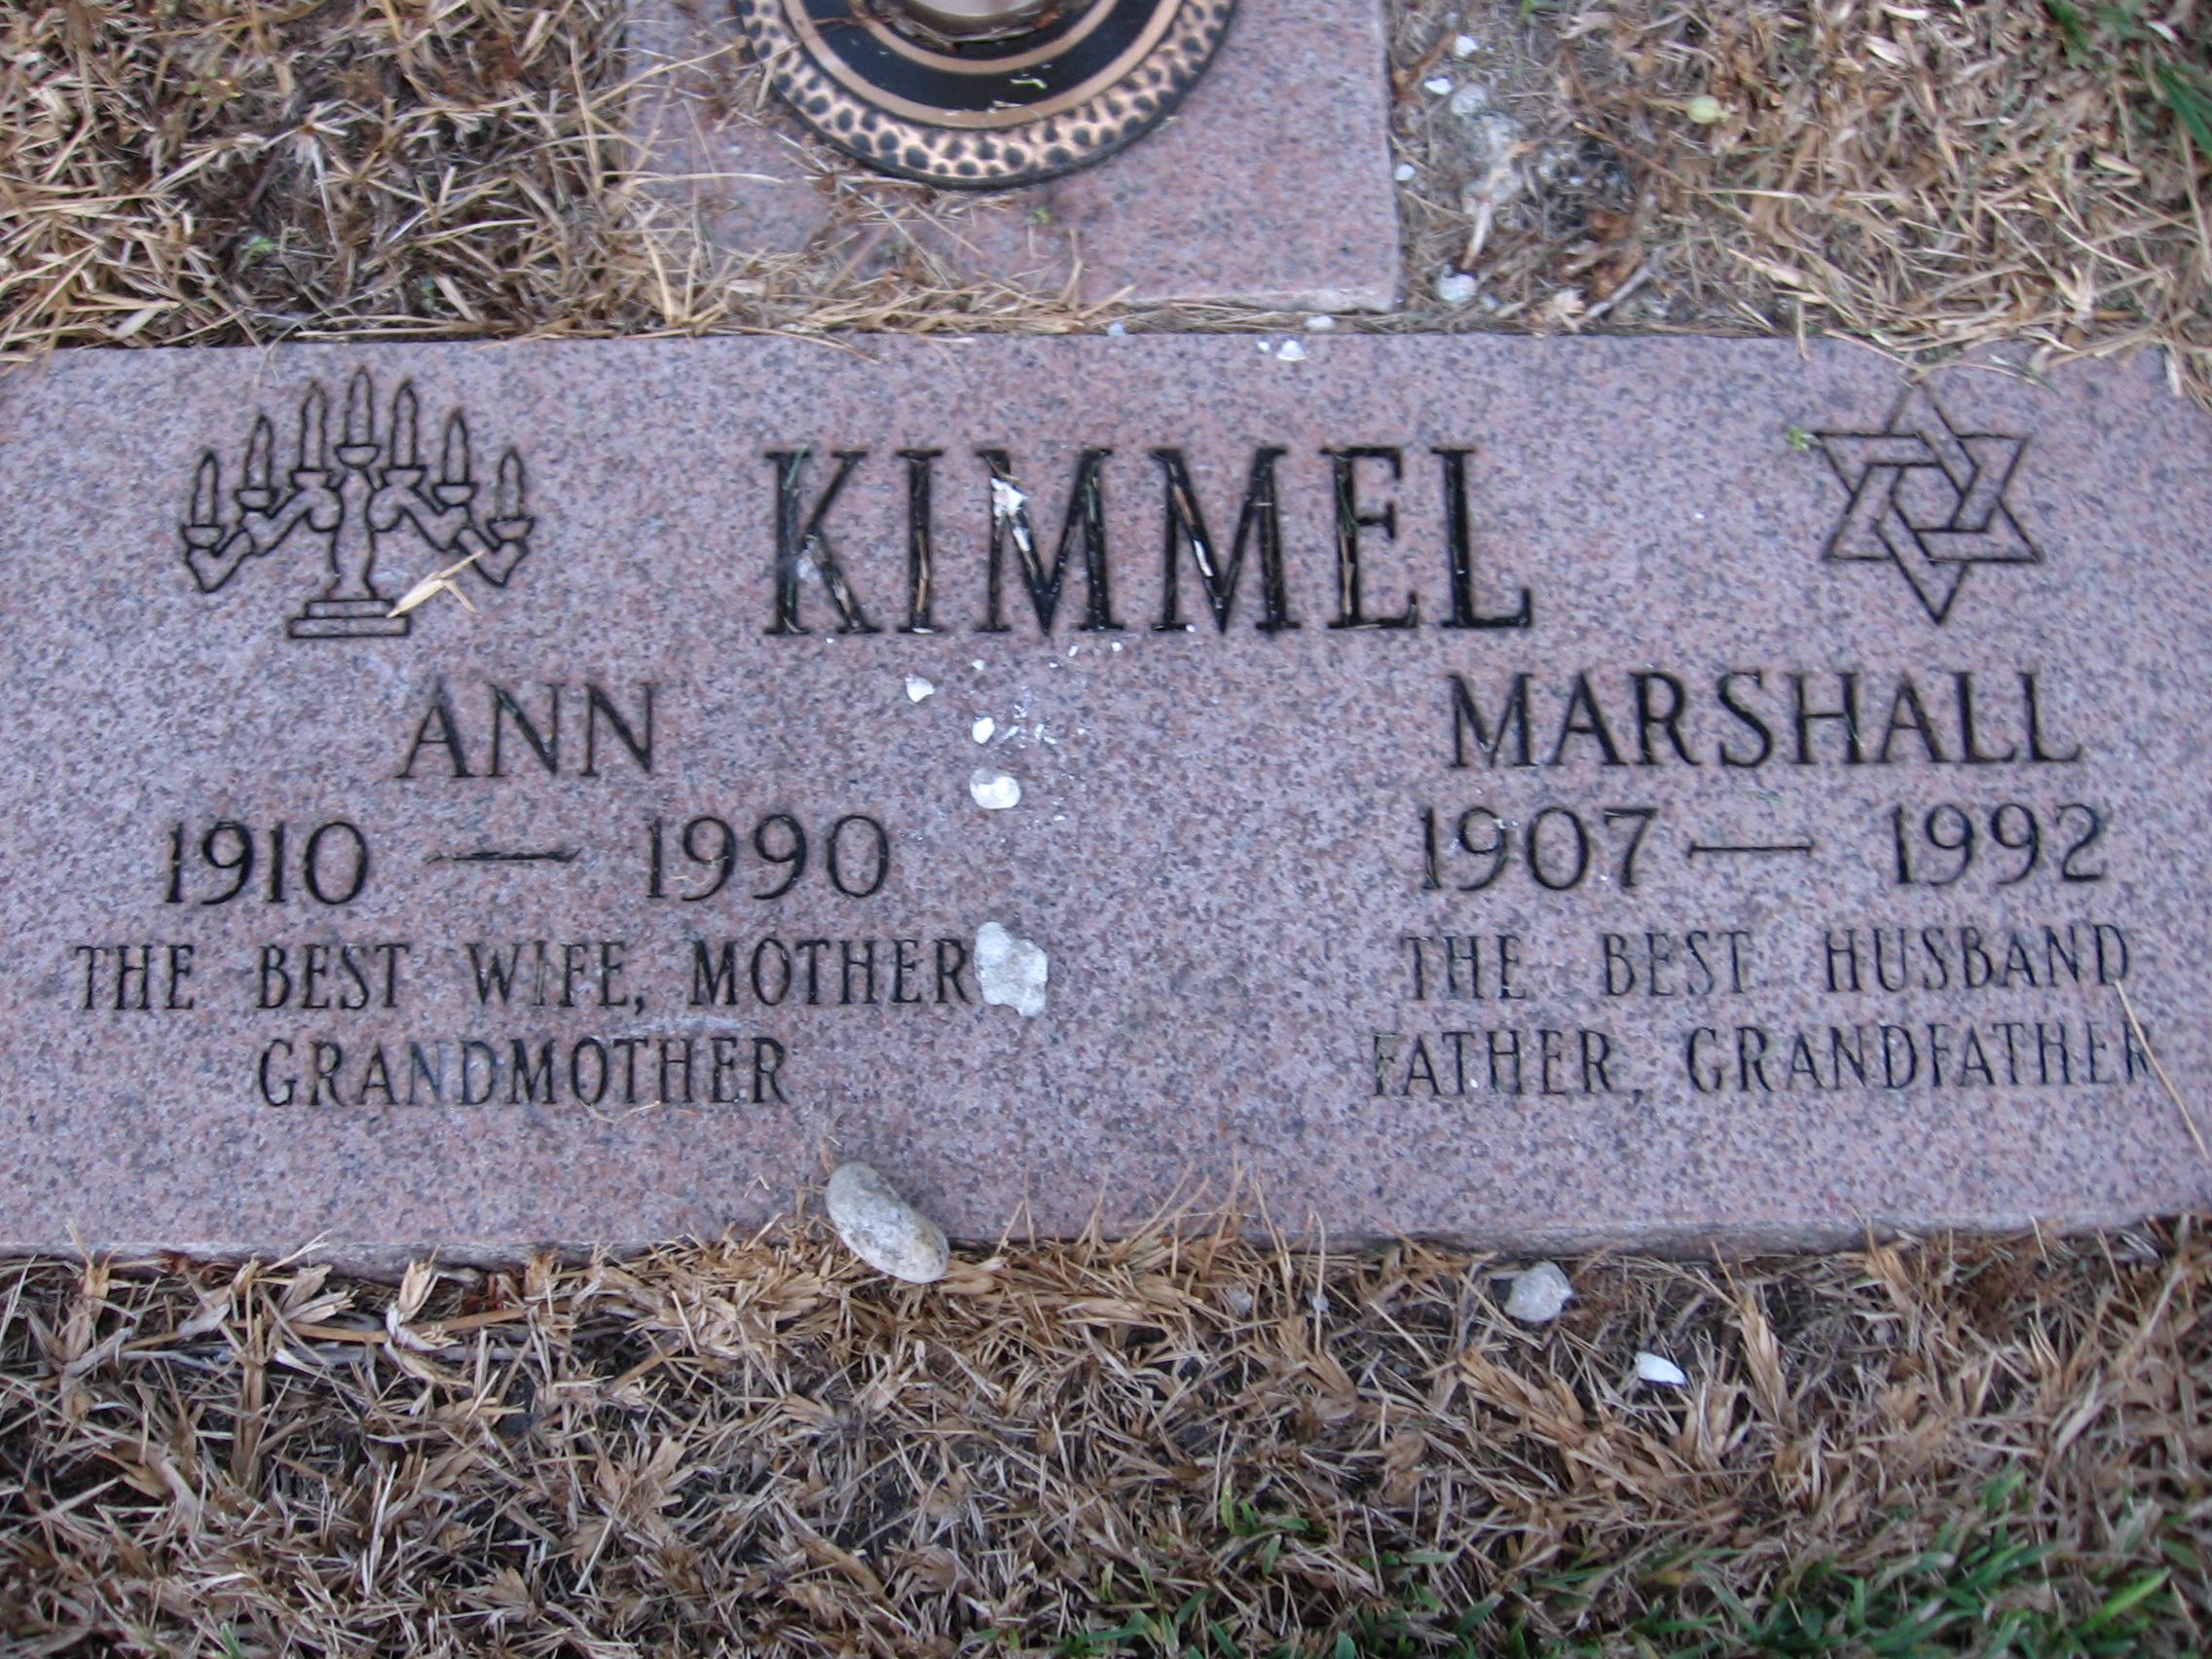 Marshall Kimmel